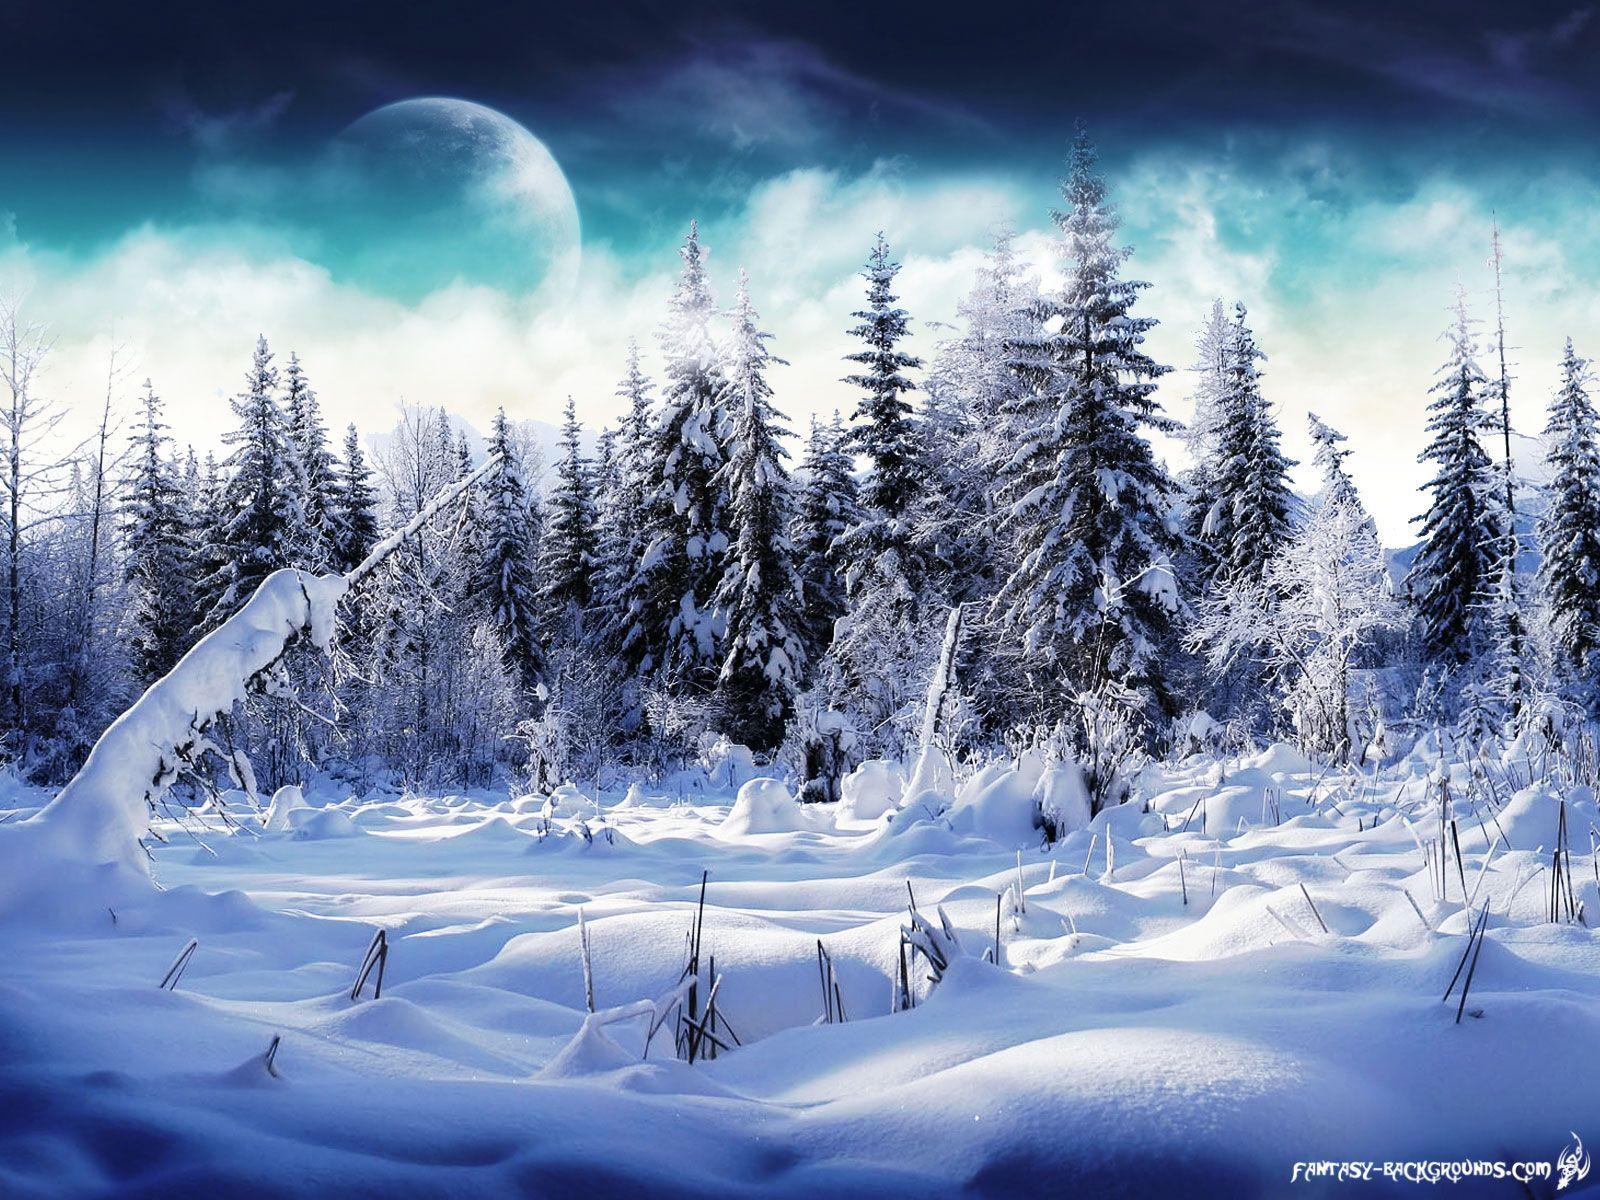 Winter Wonderland Background Image & Picture